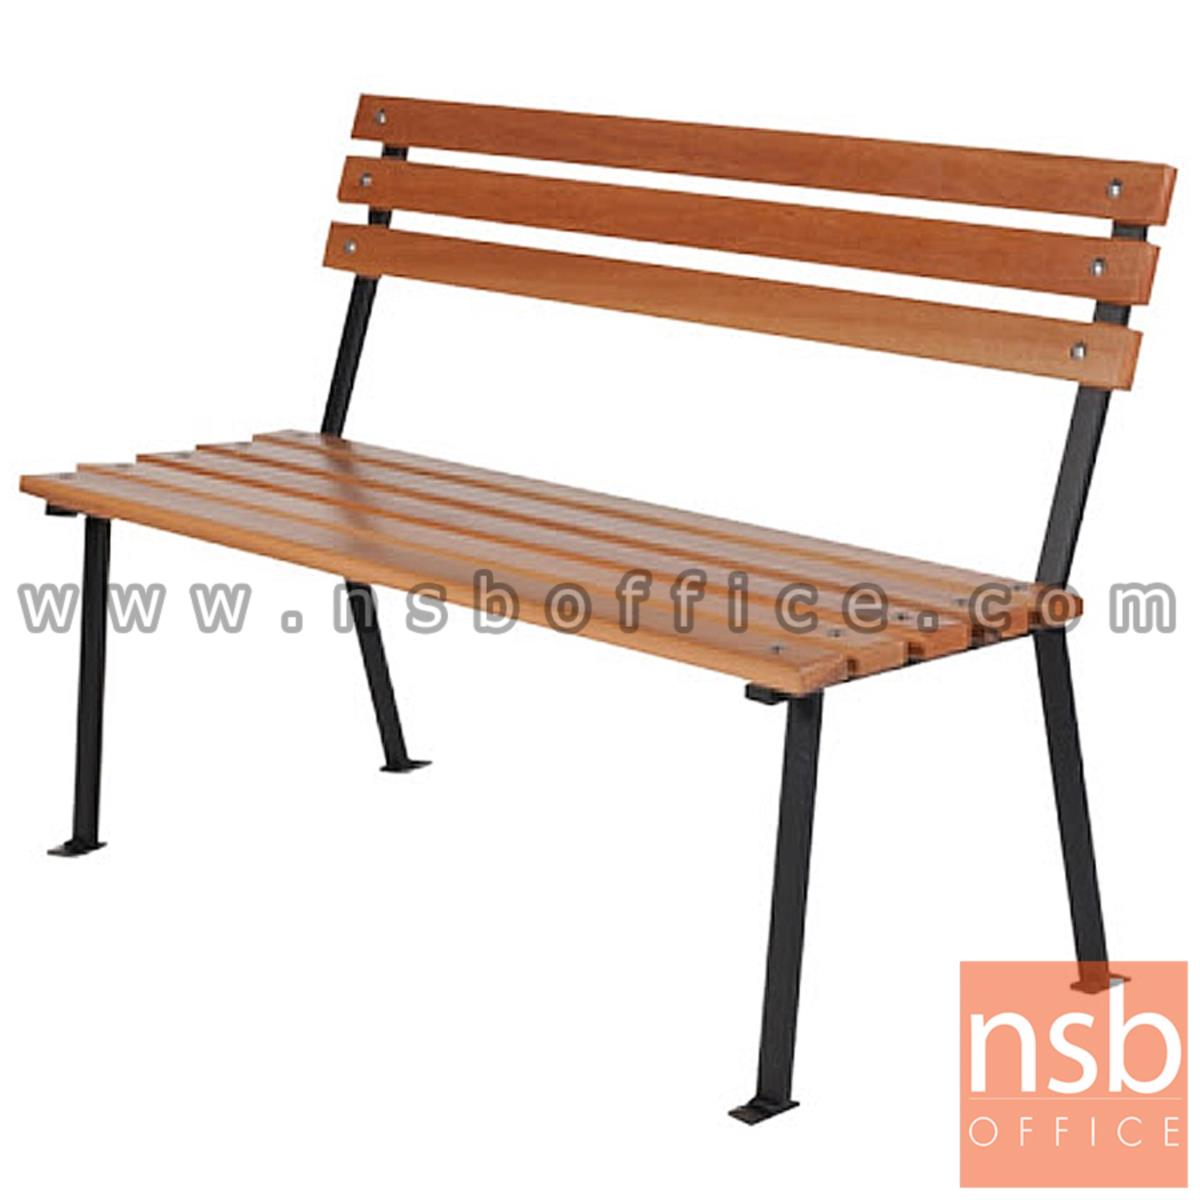 G08A039:เก้าอี้สนามไม้เต็ง เหล็กหล่อ กทม. BKK-CS10 (100, 120, 150, 200 cm)   